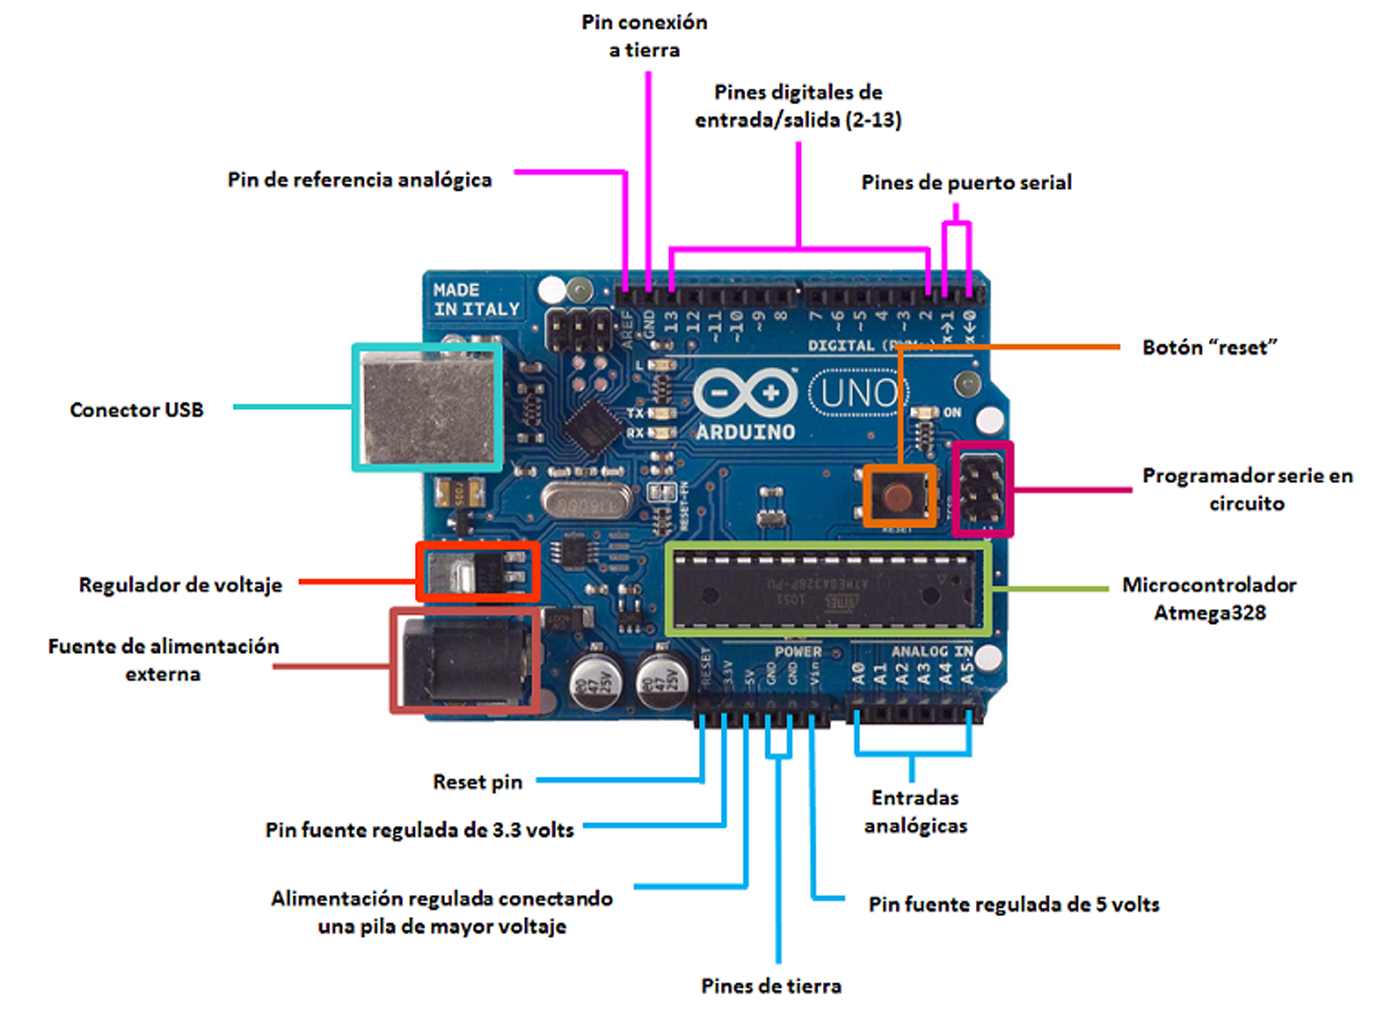 Arduino uno rev3/r3 - описание платы, драйвера - micropi